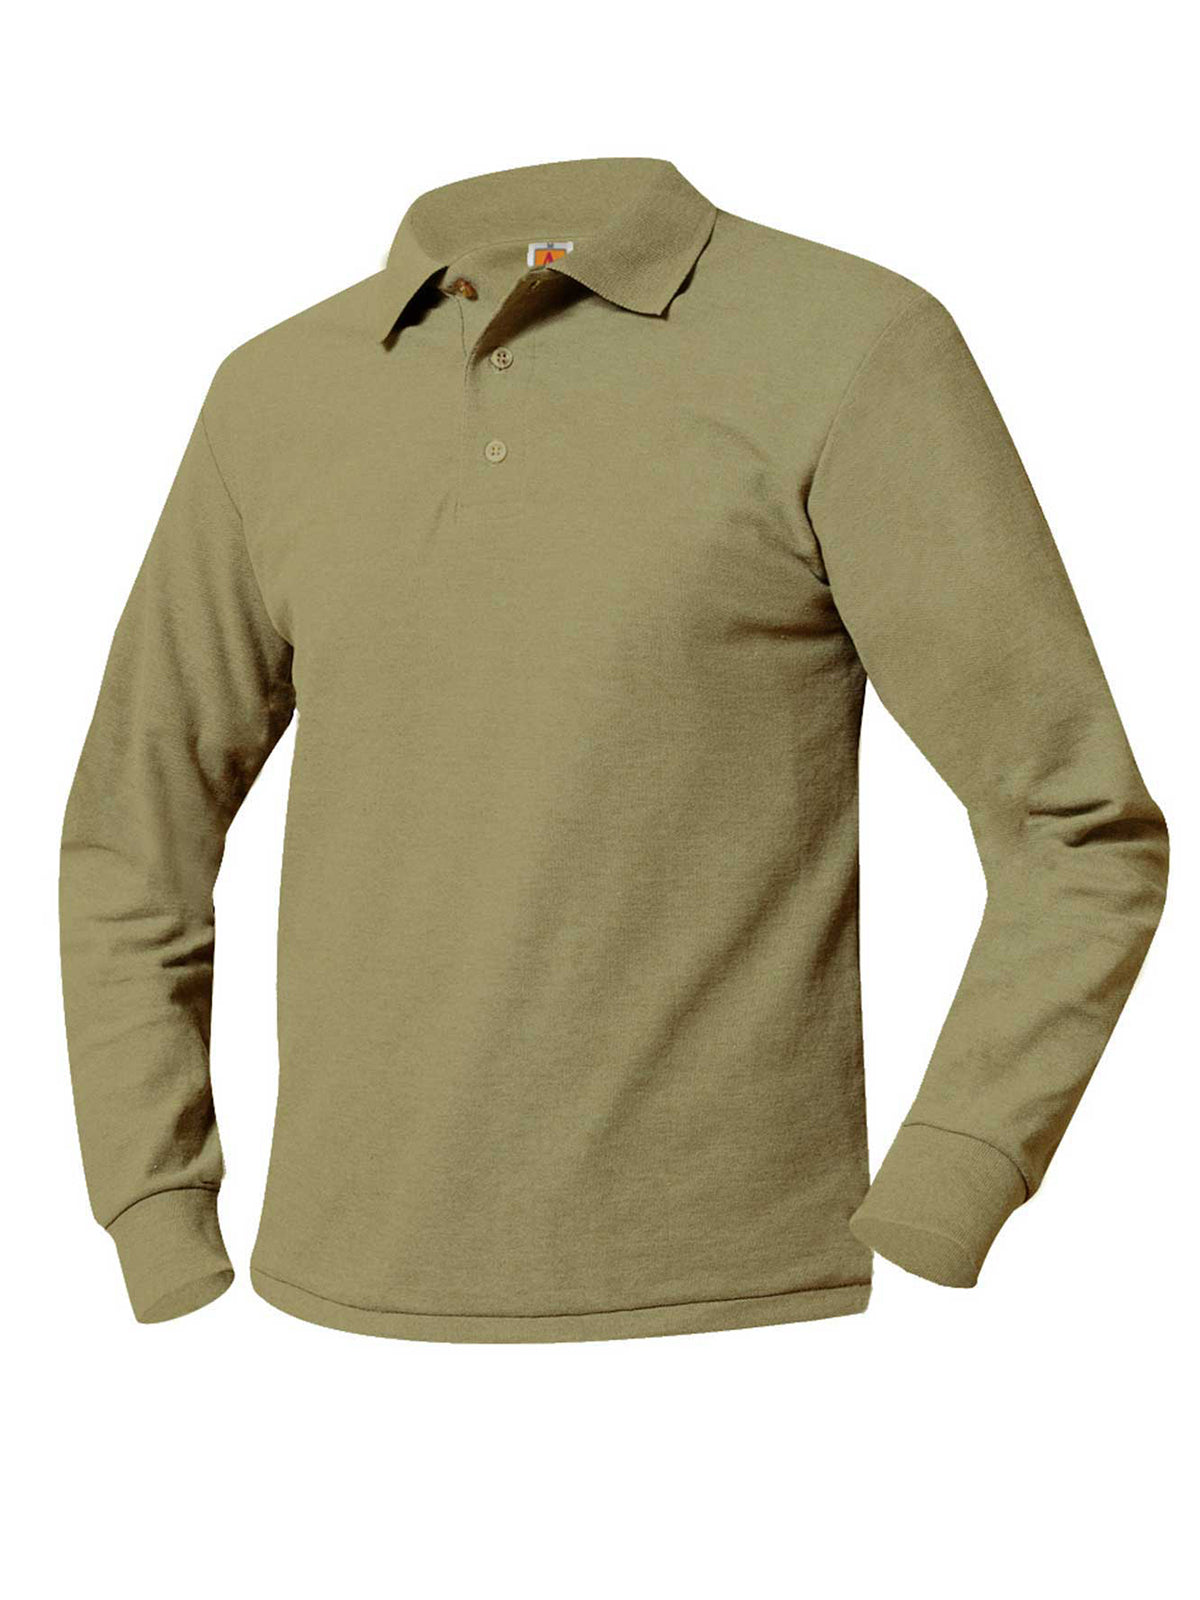 Unisex Long Sleeve Knit Shirt - 8766 - Khaki